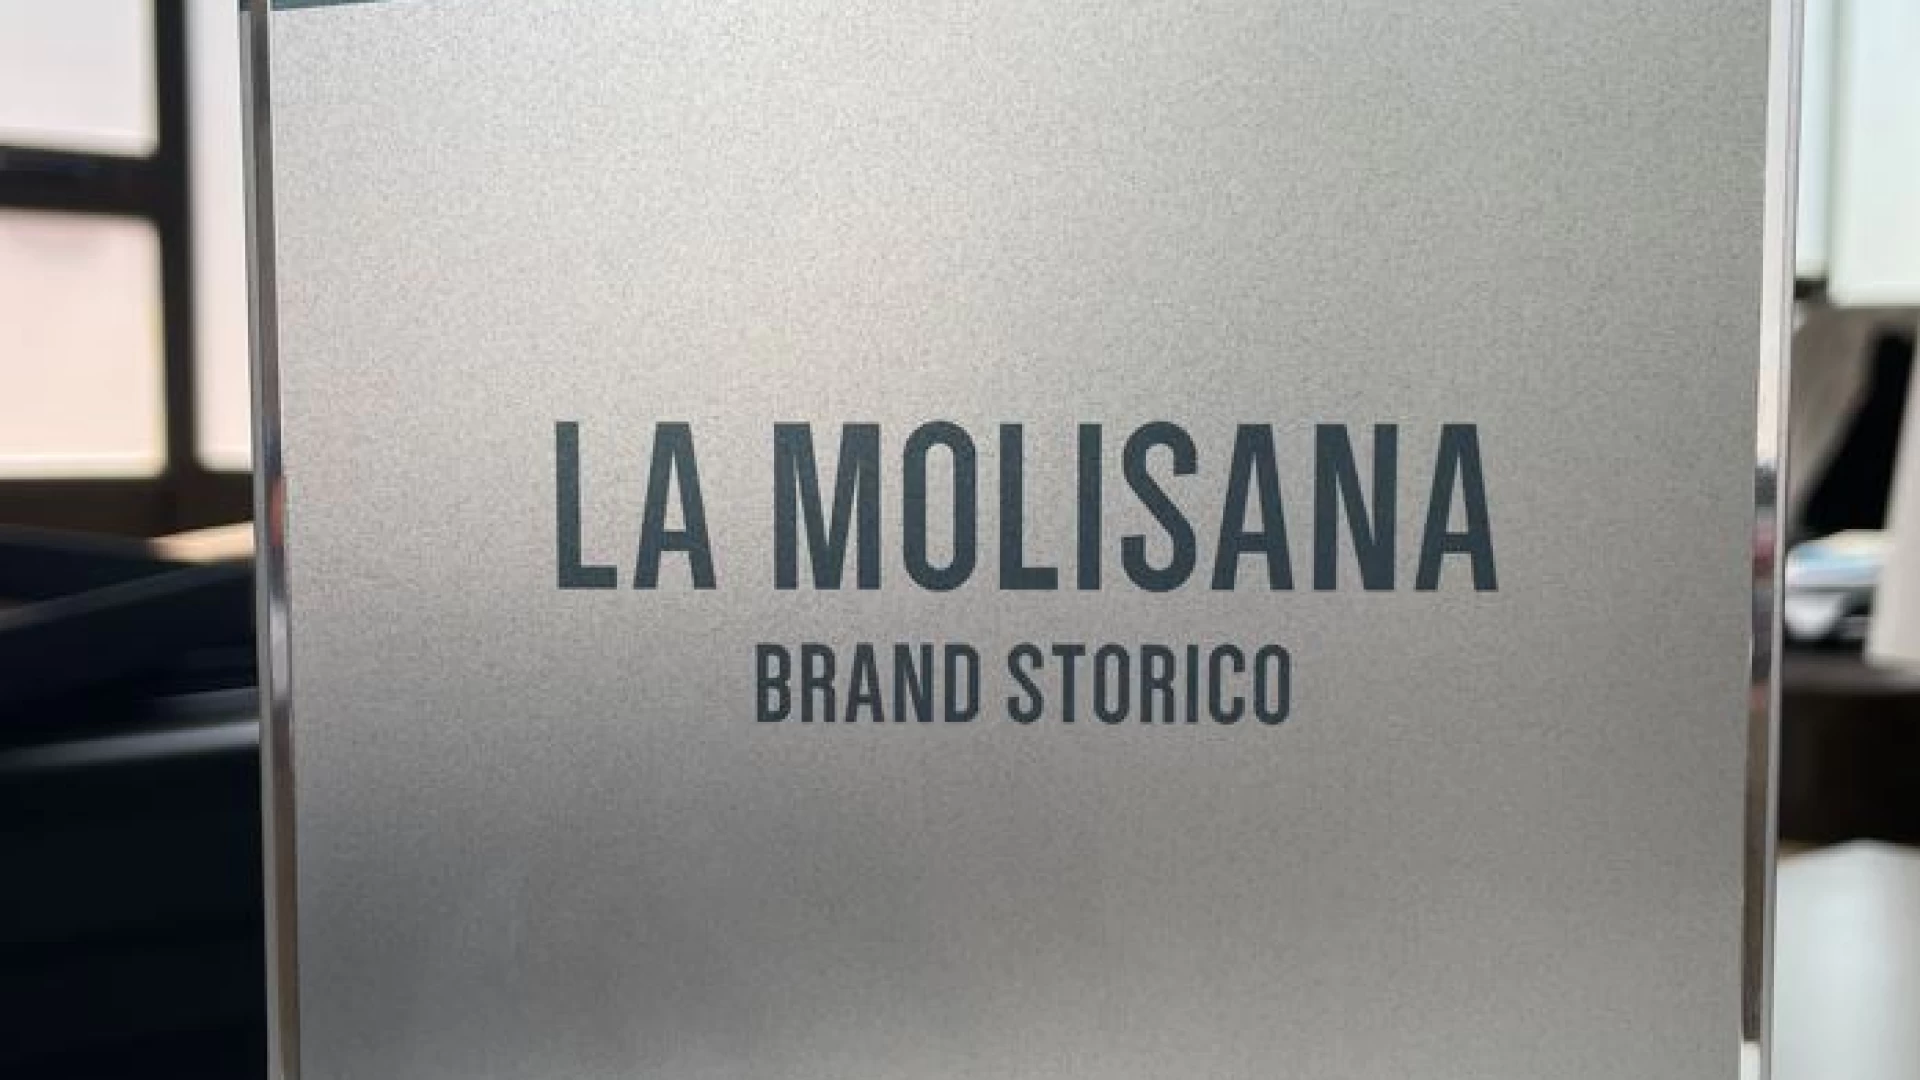 Save The Brand 2023, riconoscimento storico per la “Molisana”.